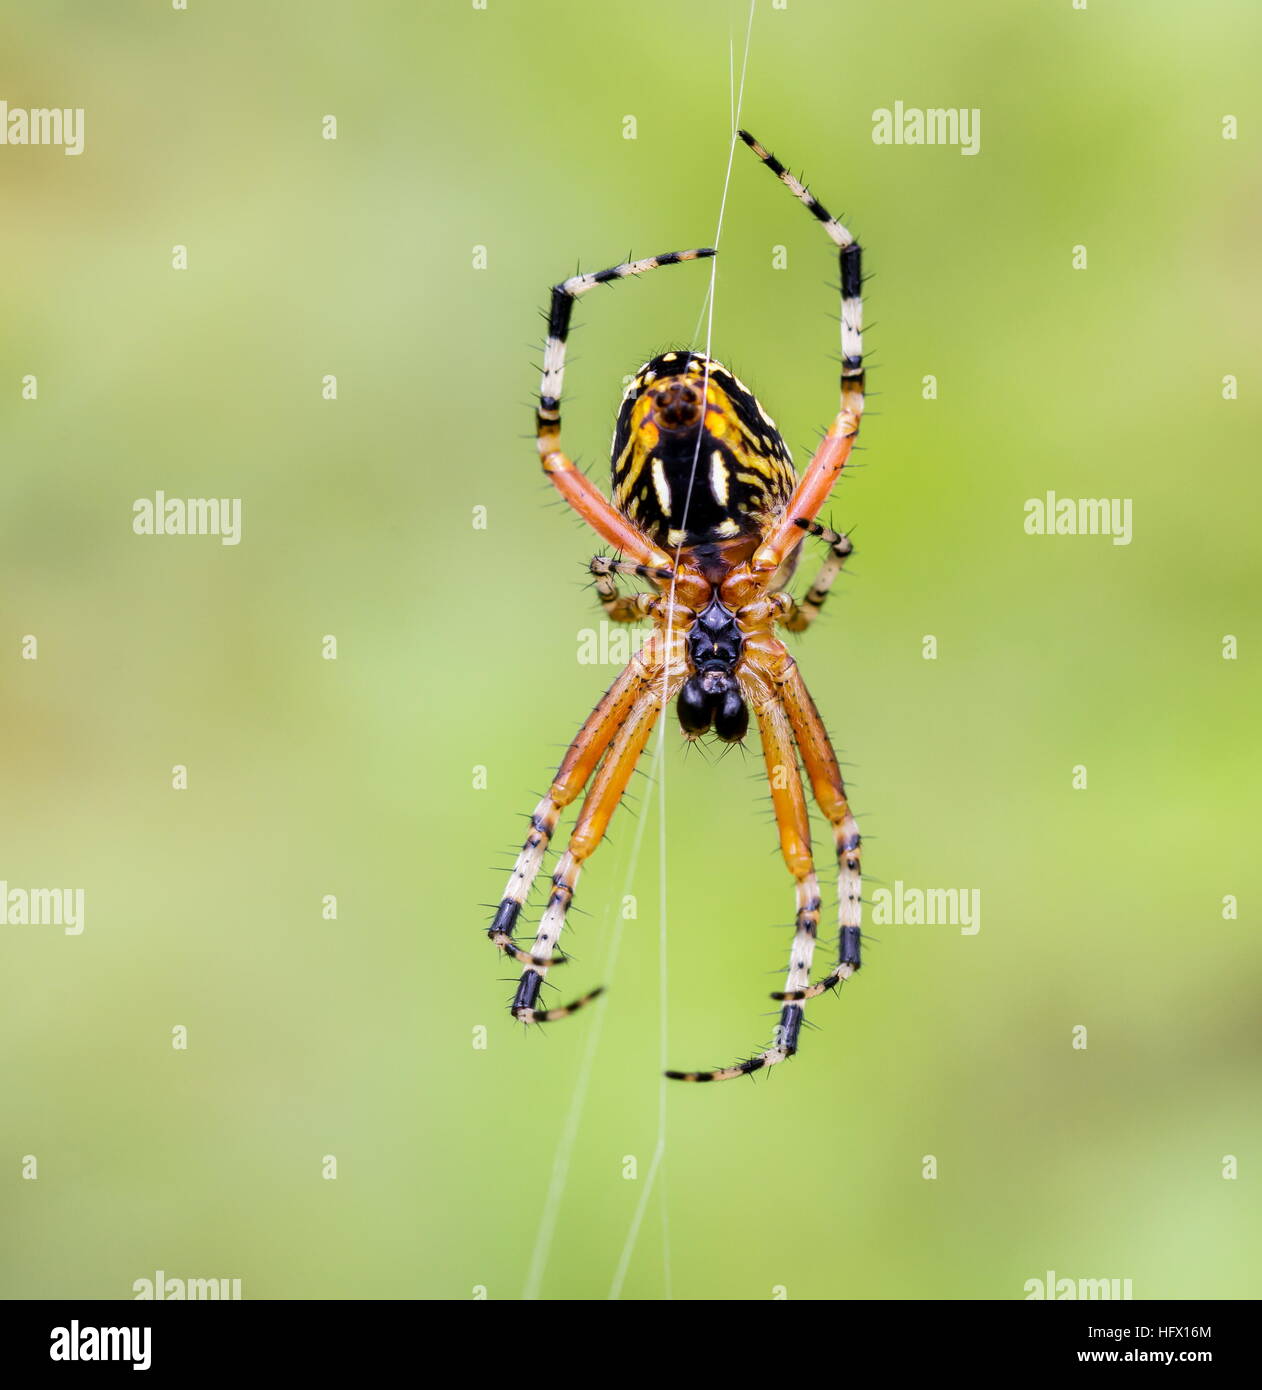 Golden Silk Orb-Weaver Spider. Stockfoto